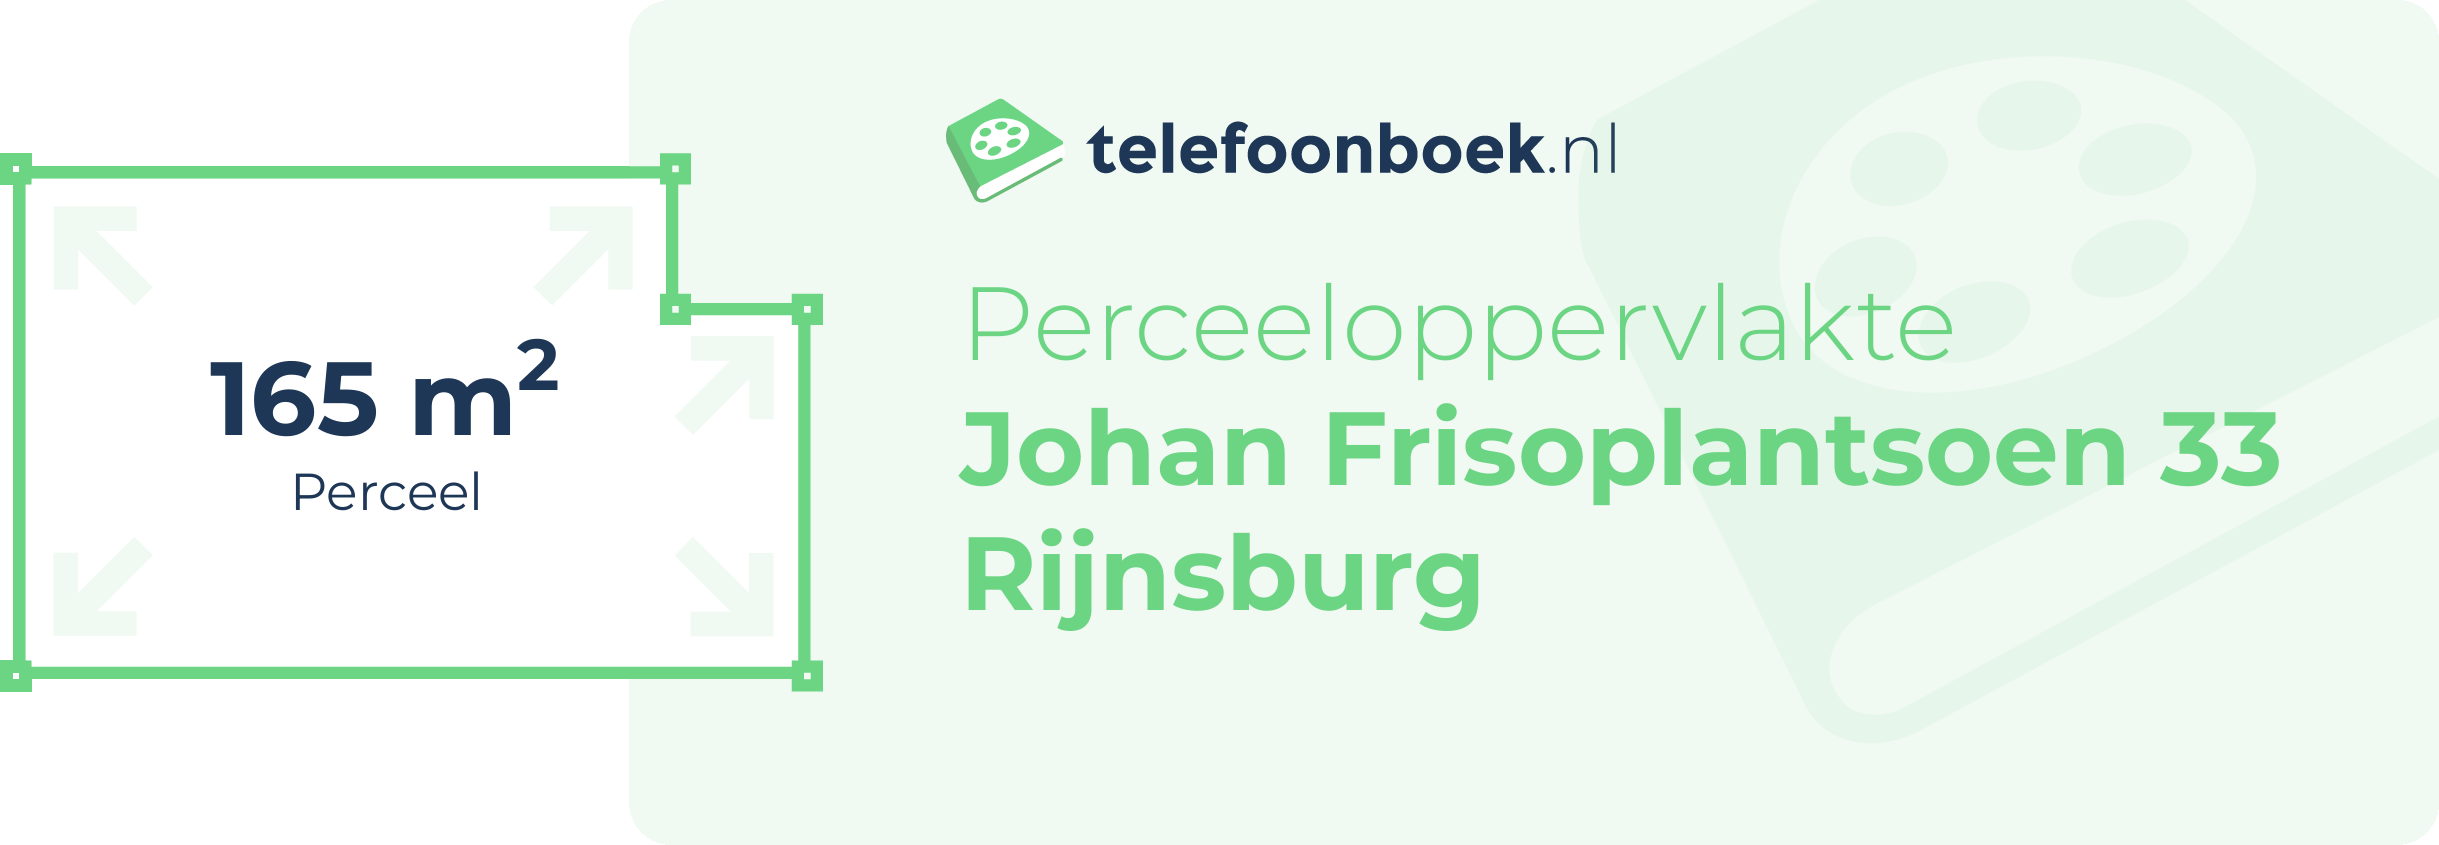 Perceeloppervlakte Johan Frisoplantsoen 33 Rijnsburg